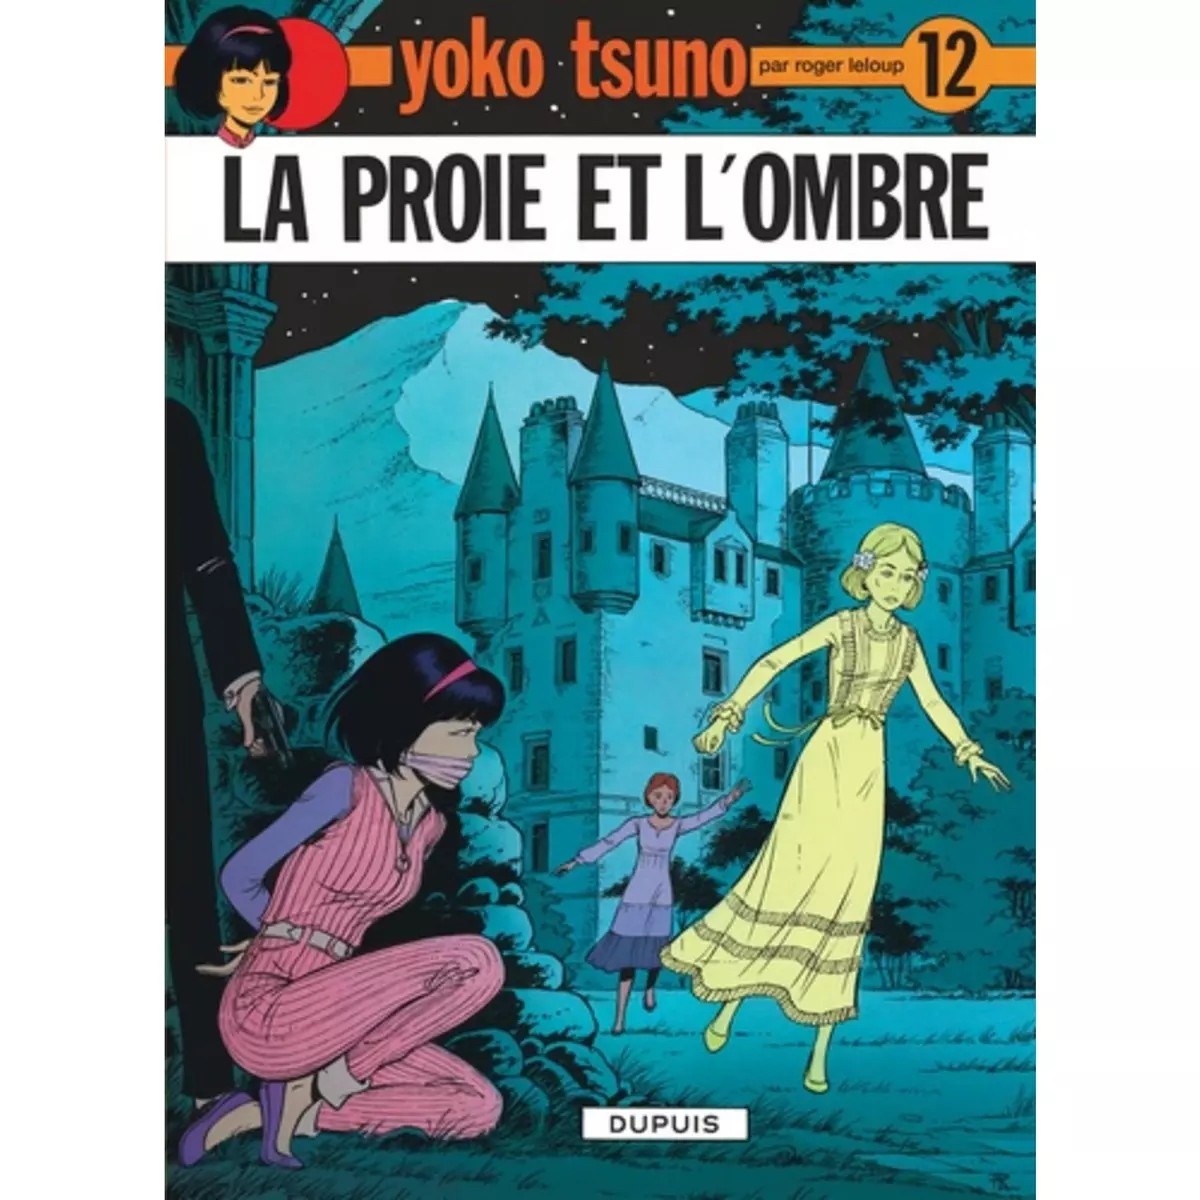  YOKO TSUNO TOME 12 : LA PROIE ET L'OMBRE, Leloup Roger